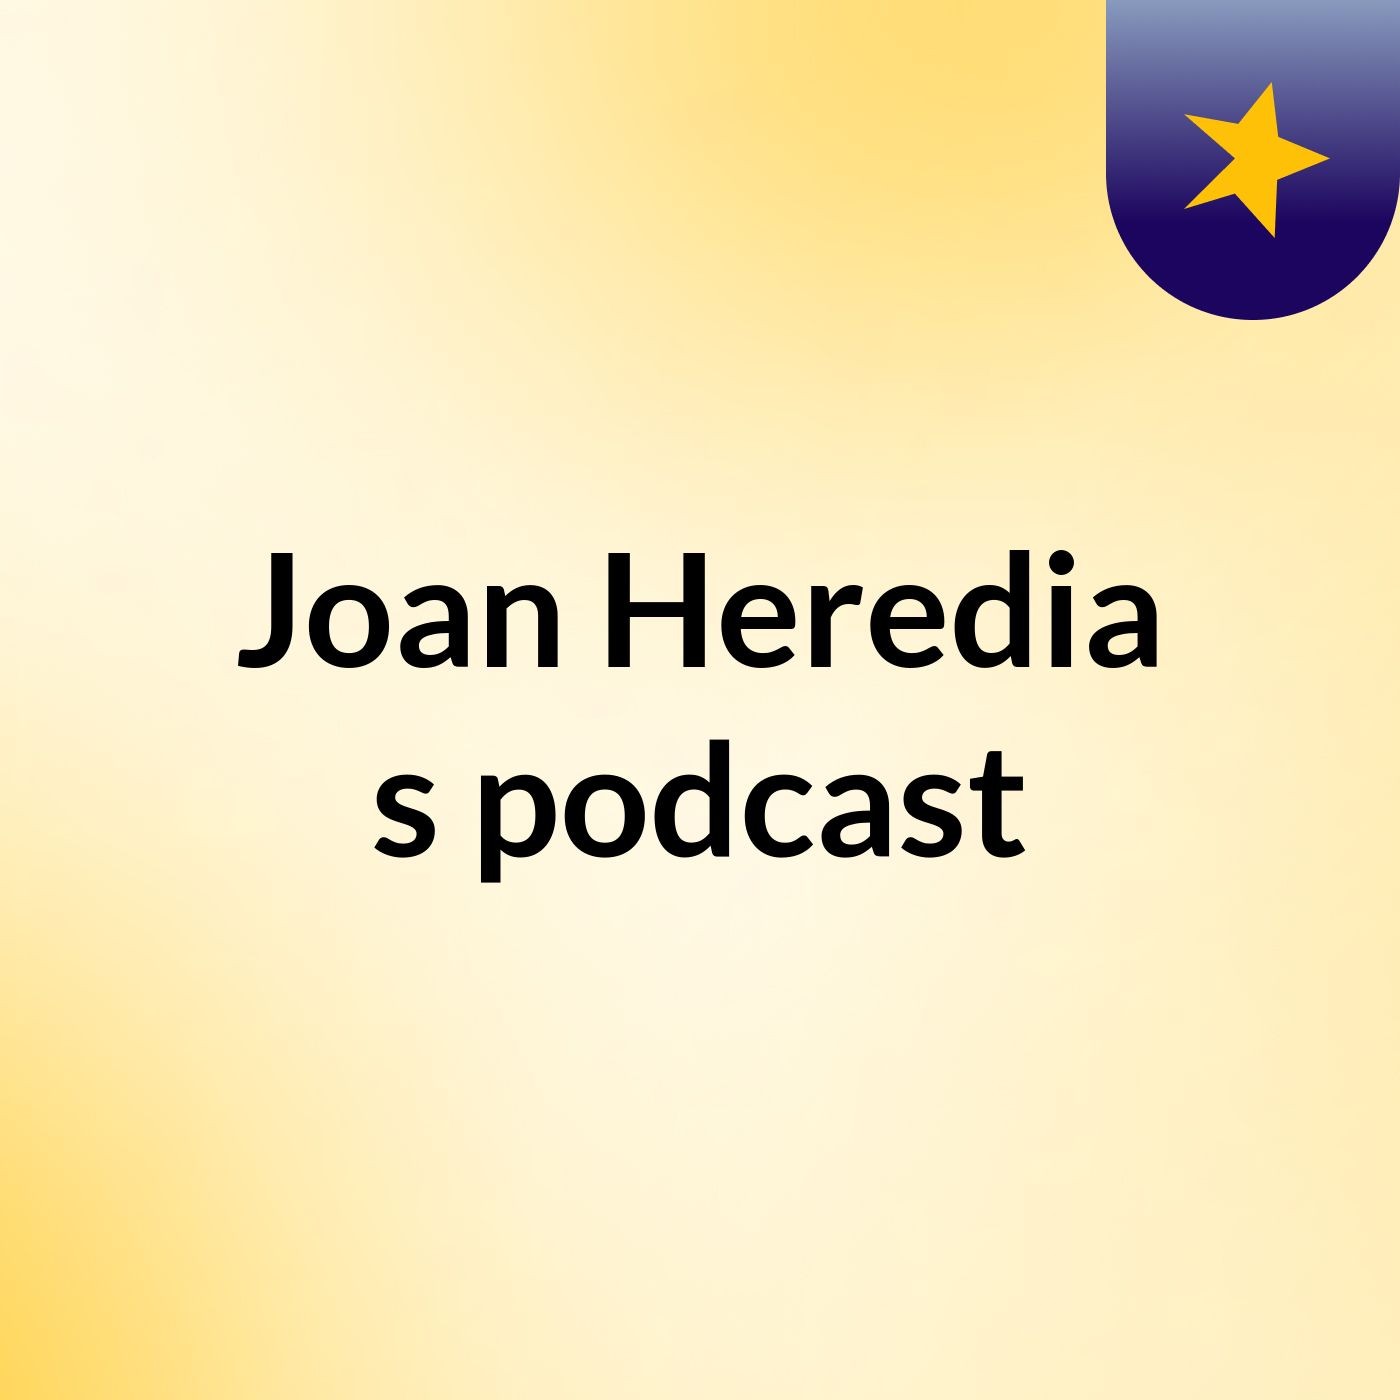 Episode 2 - Joan Heredia's podcast